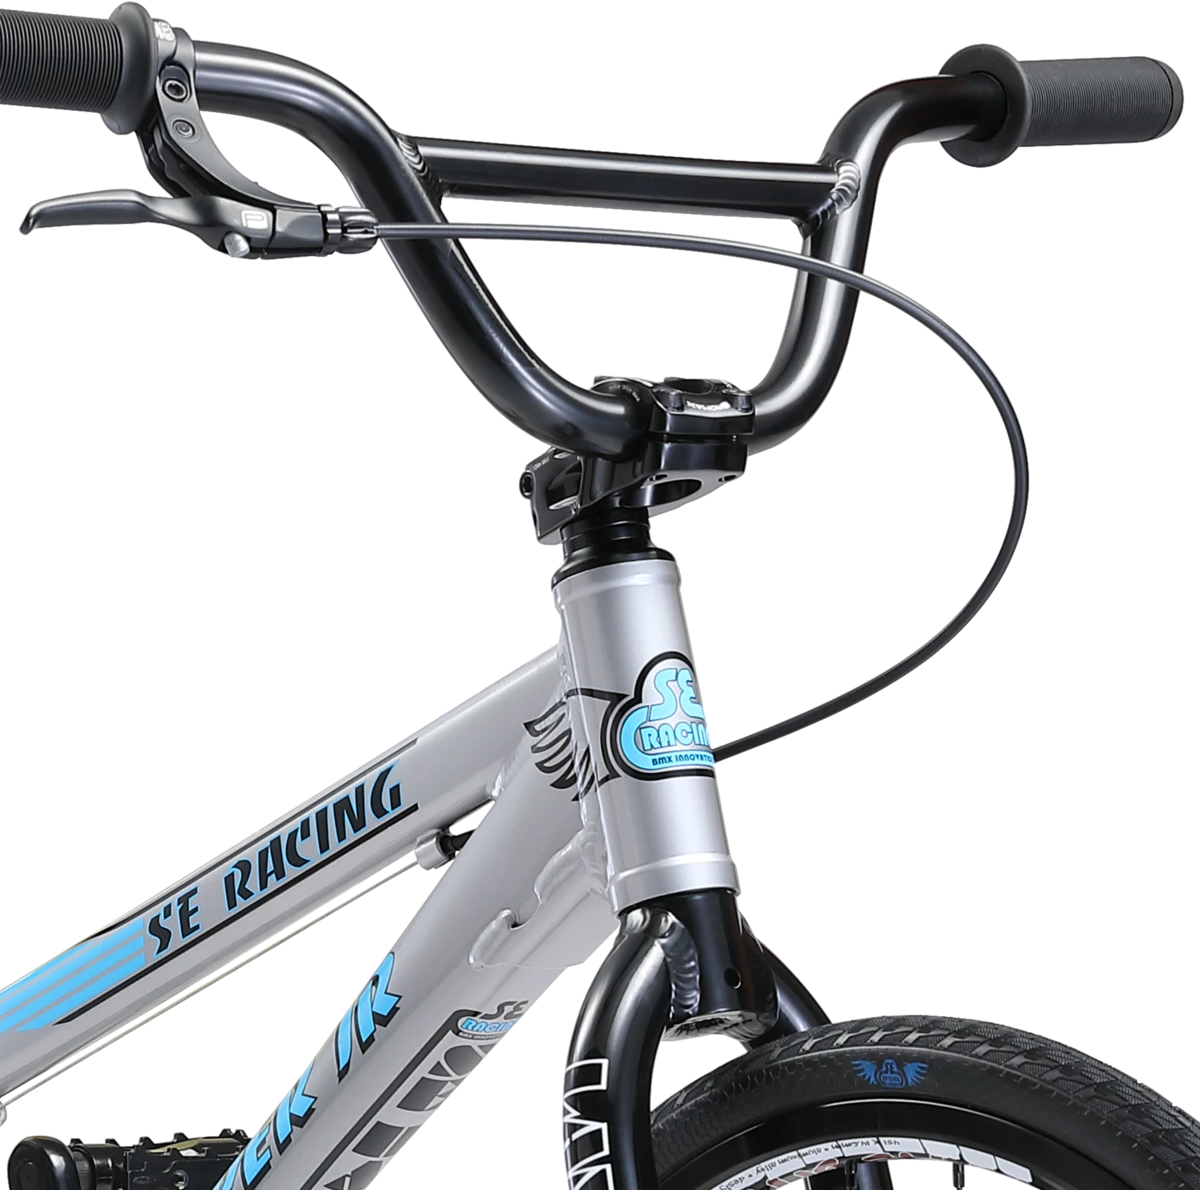 SE Bikes Ripper Jr - New Horizons Bikes, Westfield MA